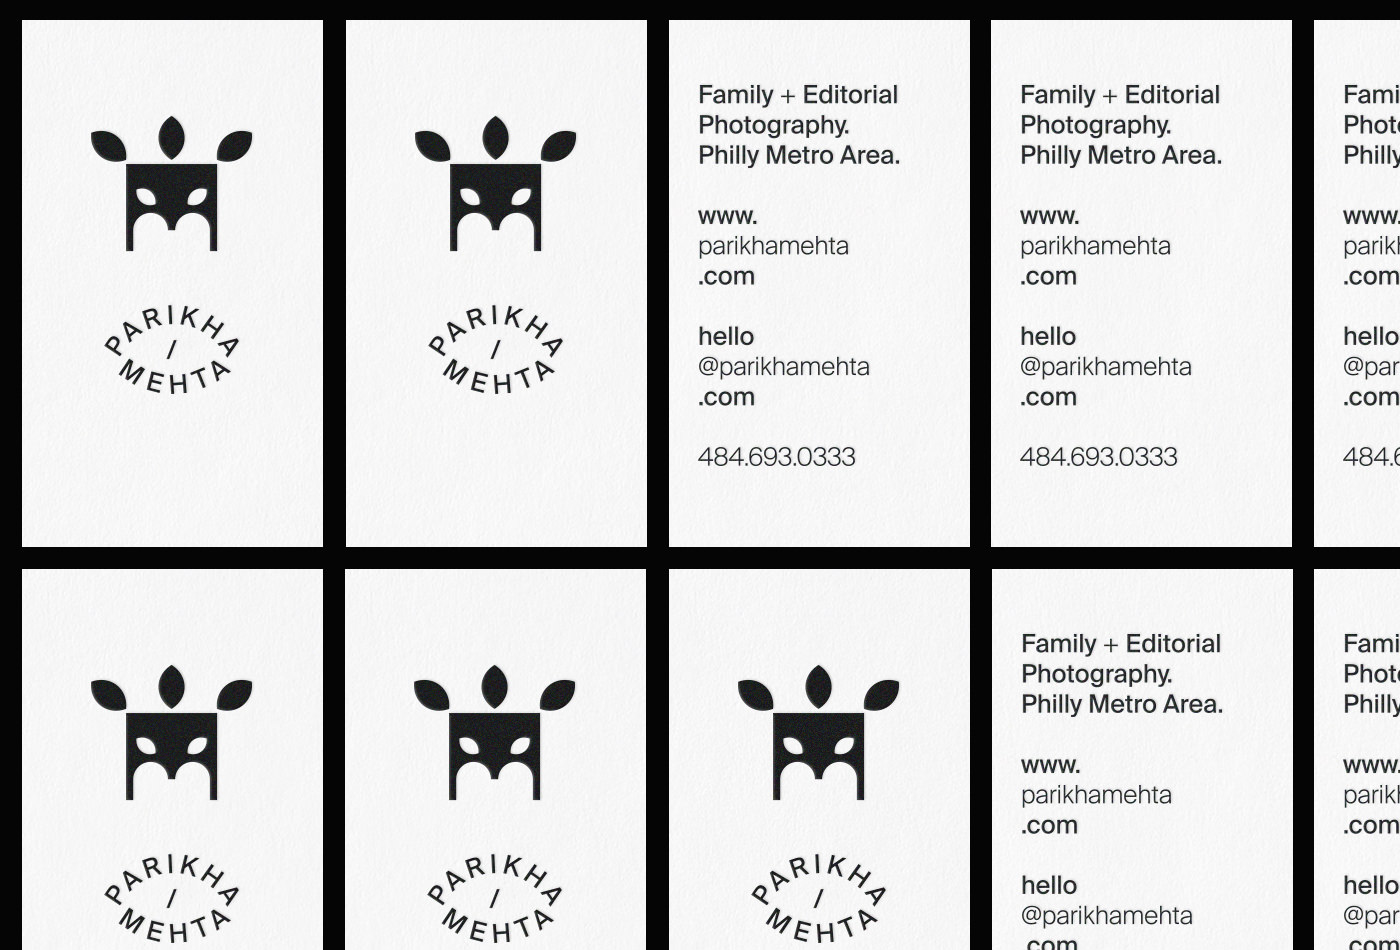 parikha-mehta-parikhamehta-photography-philadelphia-philly-family-editorial-pm-branding-brand-system-letterhead-invoice-vacaliebres-business-cards